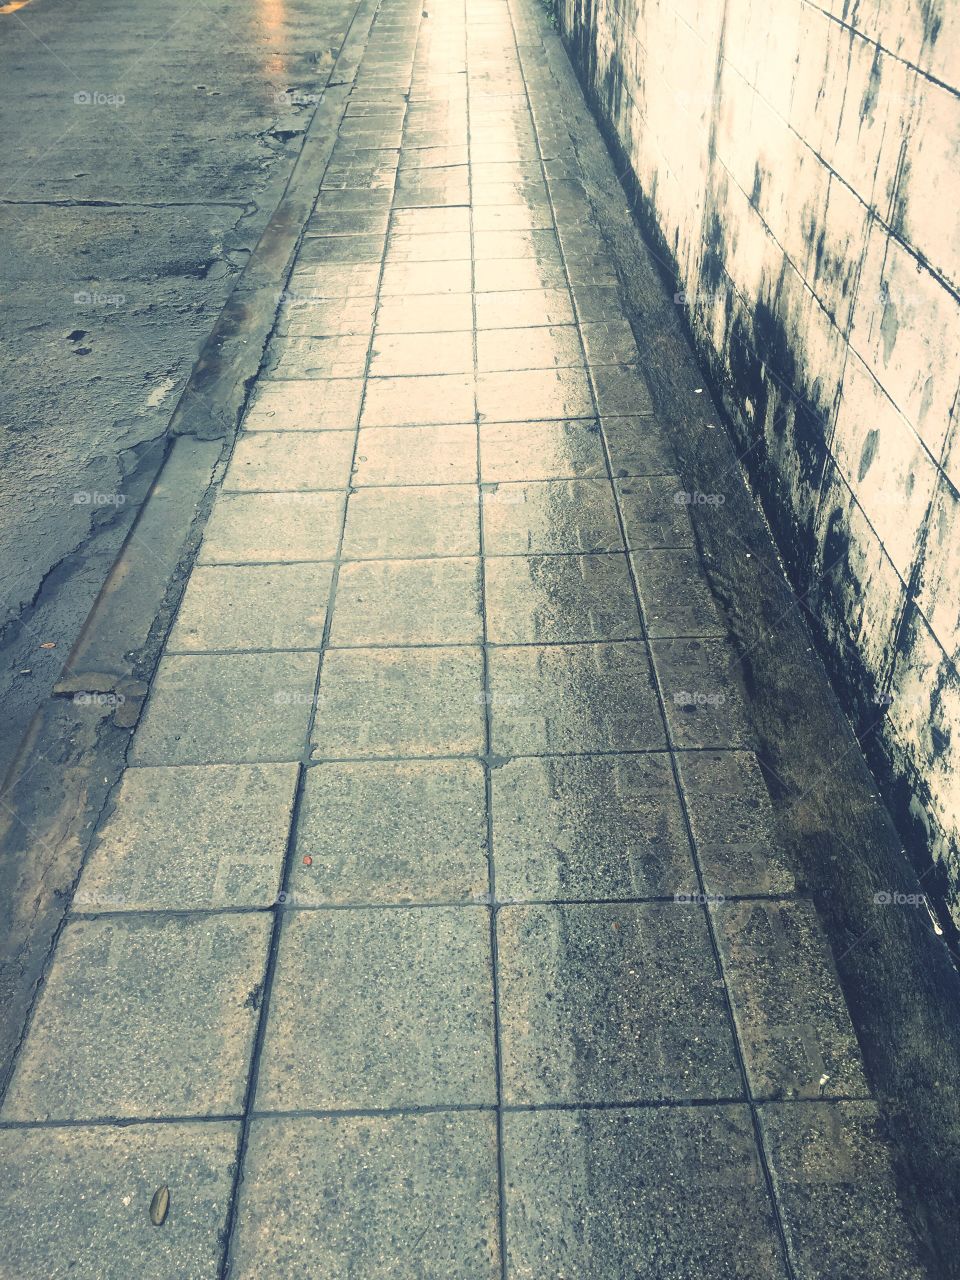 Beautiful drop water and wall shadows on street.